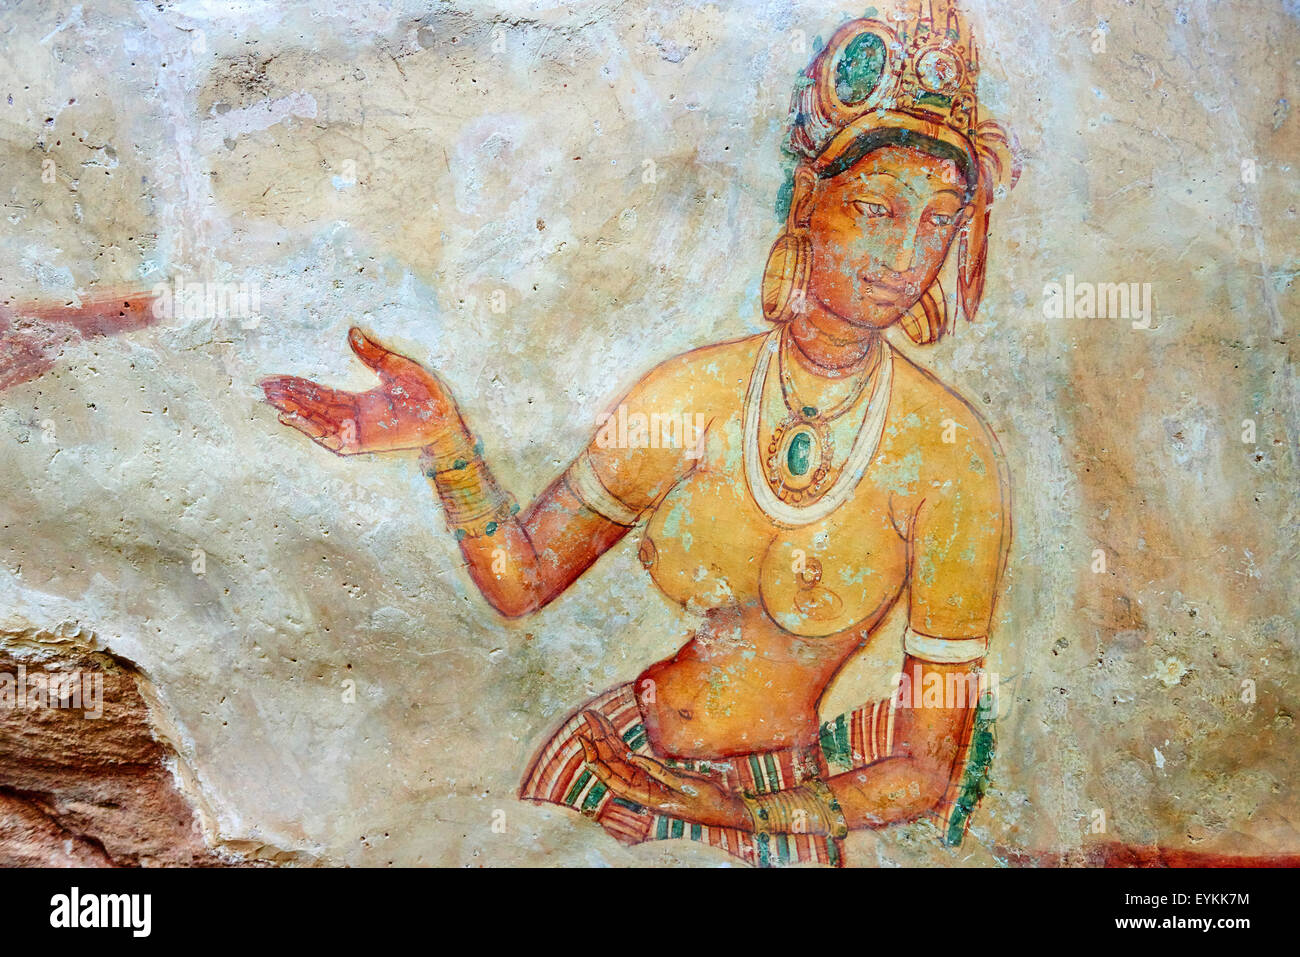 Sri Lanka, Ceylon, North Central Provinz, Felsenfestung Sigiriya Löwe, UNESCO-Weltkulturerbe, Höhle Fresken des 5. cen Stockfoto